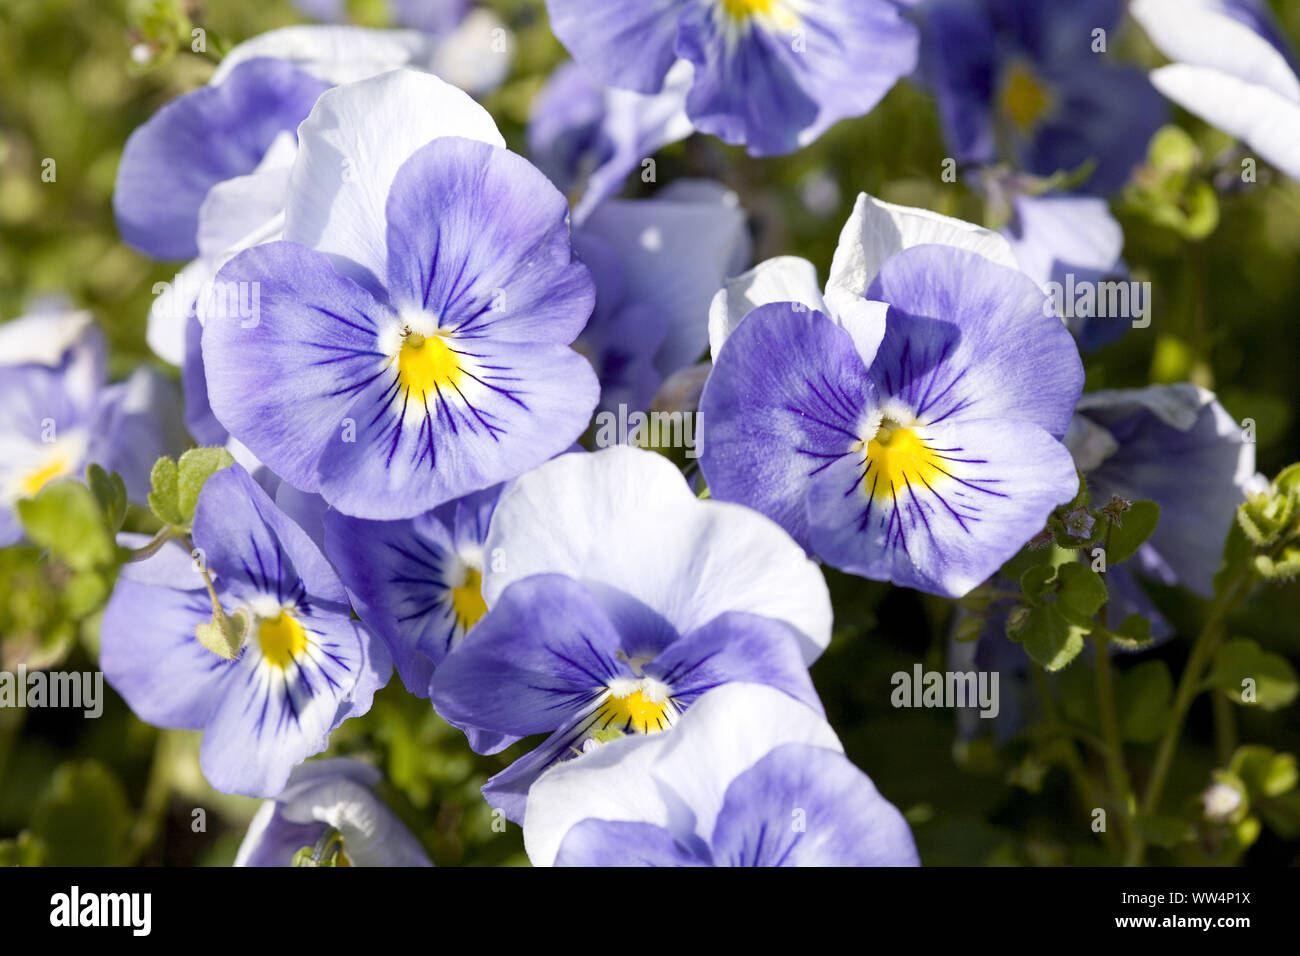 Purple pansies in the garden Stock Photo